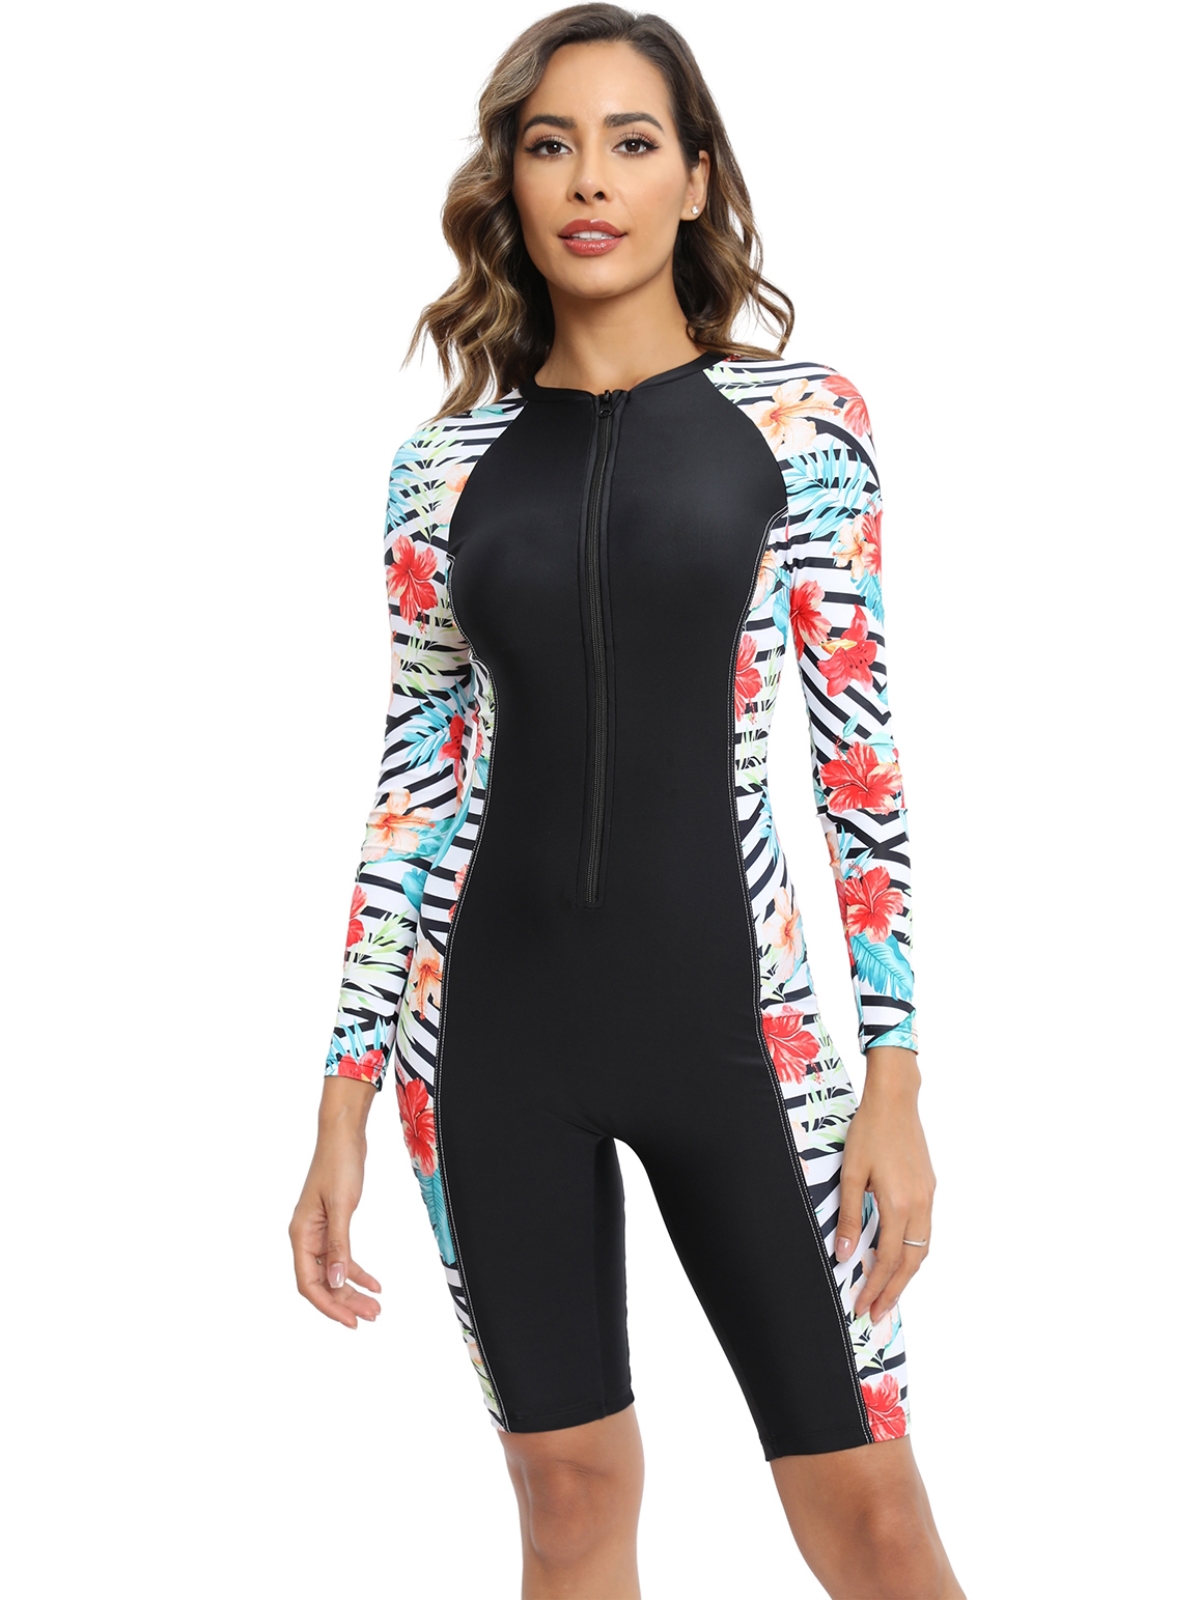 EFINNY Women's Wetsuit Long Sleeve Shorty Diving Suit Front Zip Wetsuit ...